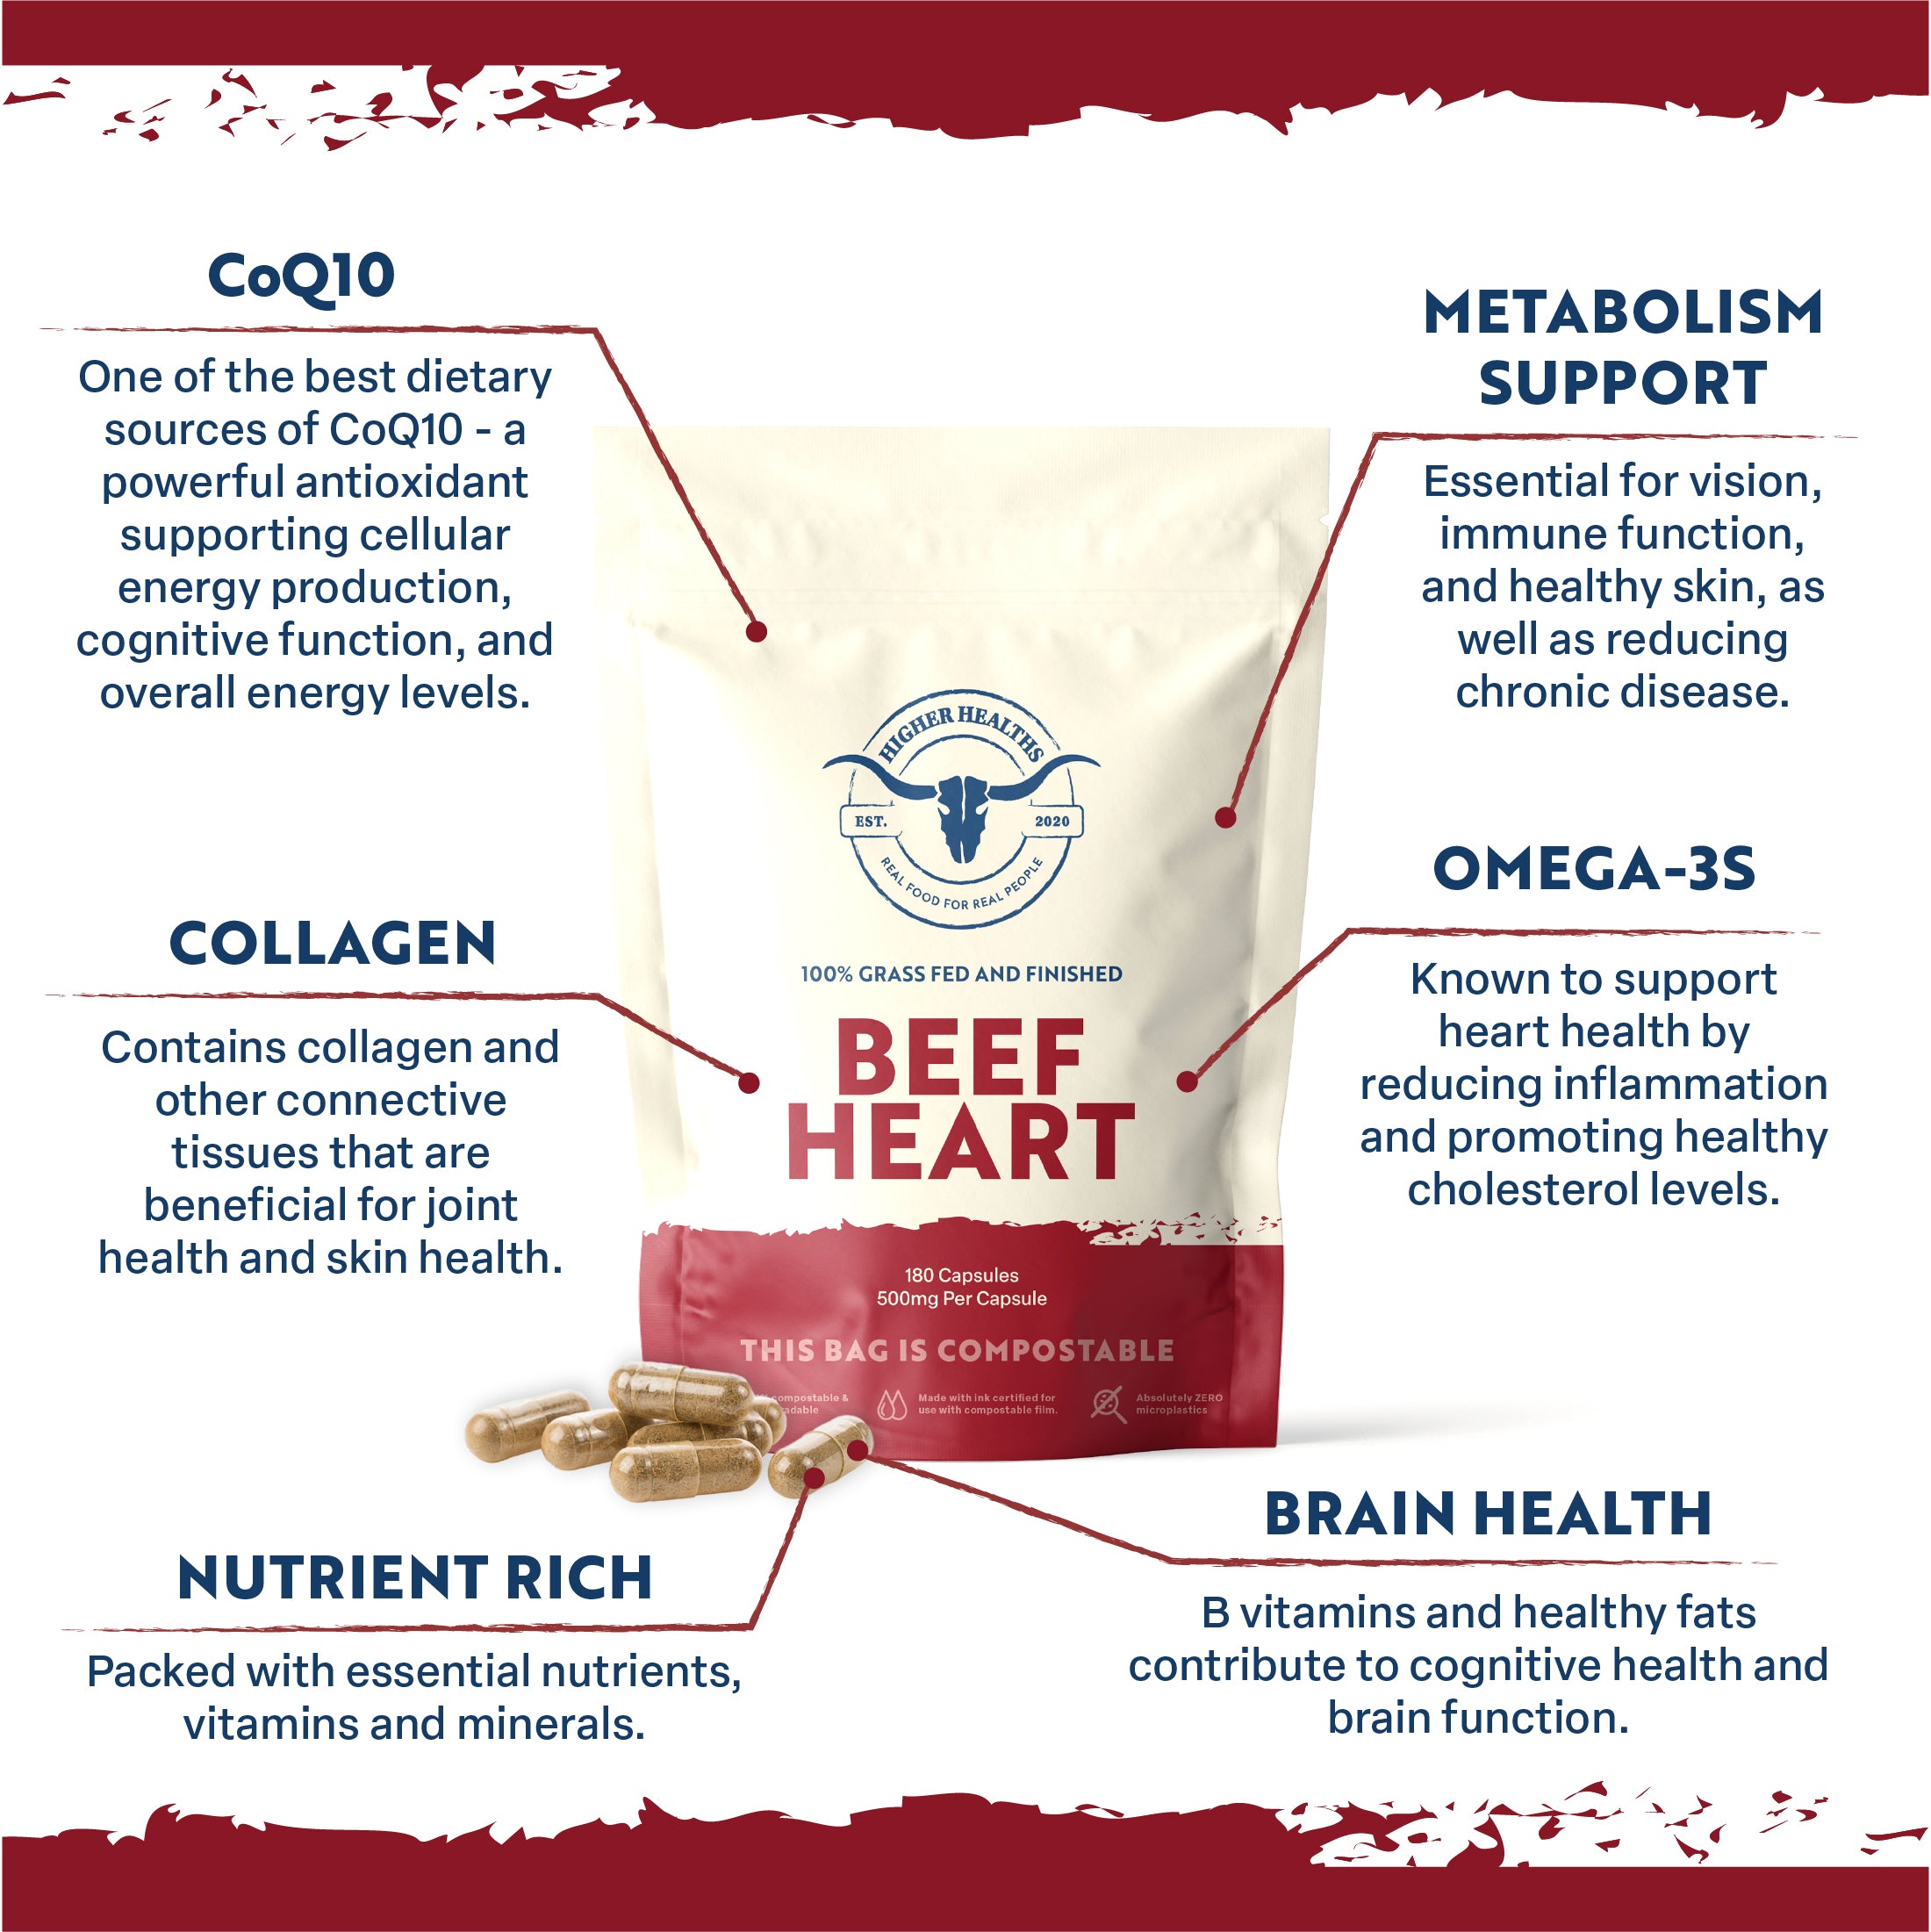 Beef Heart - Antioxidant Abundance